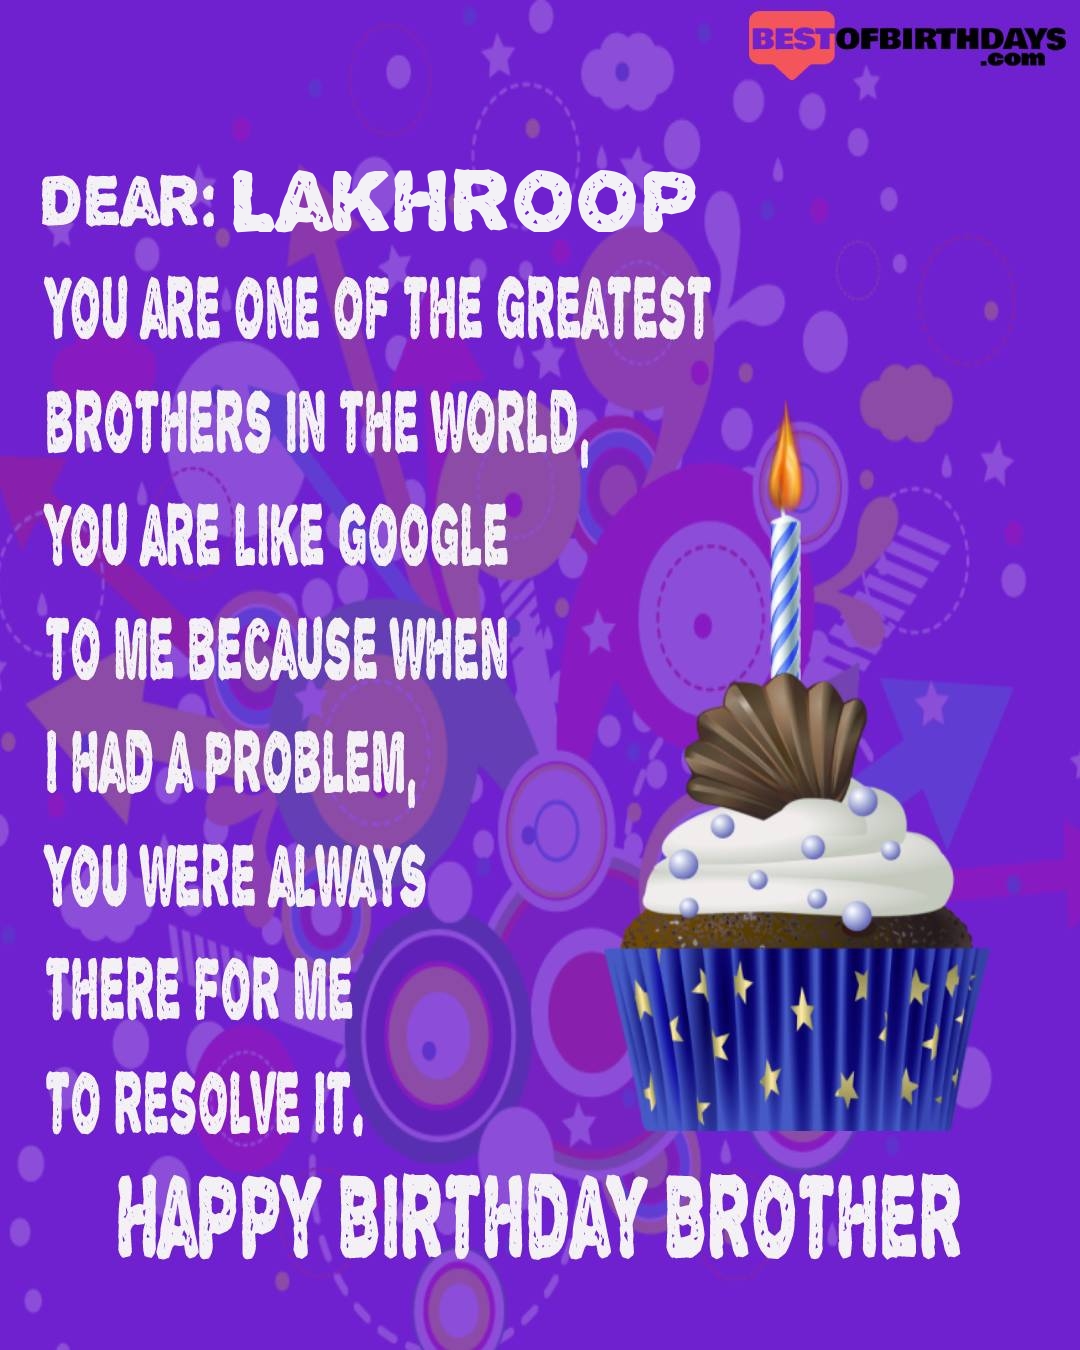 Happy birthday lakhroop bhai brother bro